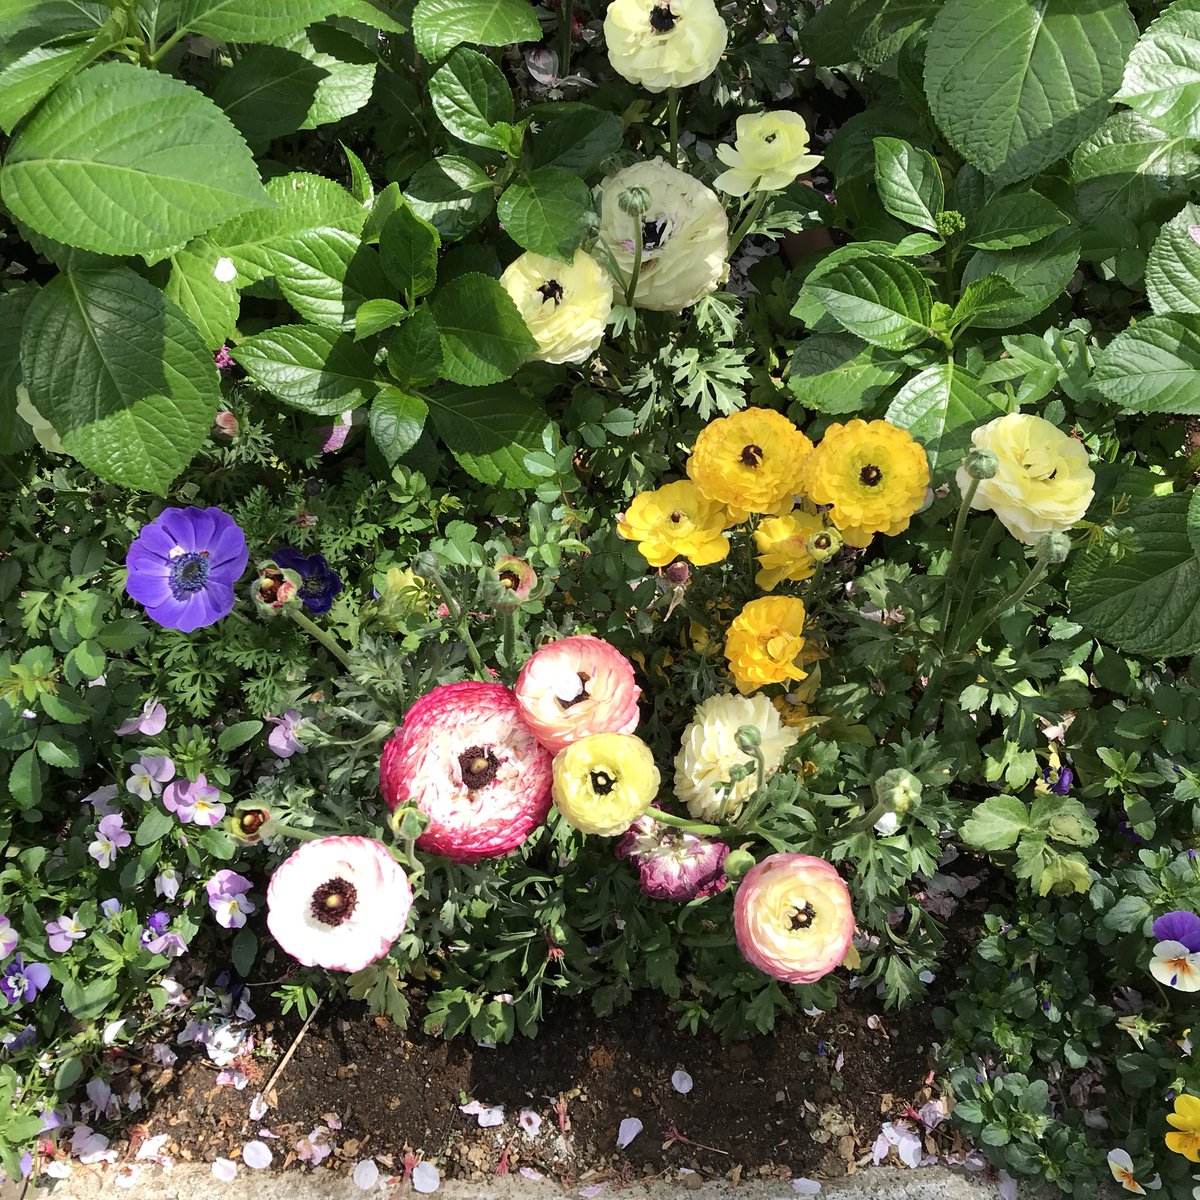 Ichiro Mizuki En Twitter おはゼーット 道端の花壇に咲くラナンキュラスの花 とても縁起の良い花で花言葉 は とても魅力的 名声 名誉 合格 などなど また色によってそれぞれの花言葉もありますよ 今日も良い一日を Have A Nice Day Pura Vida Z